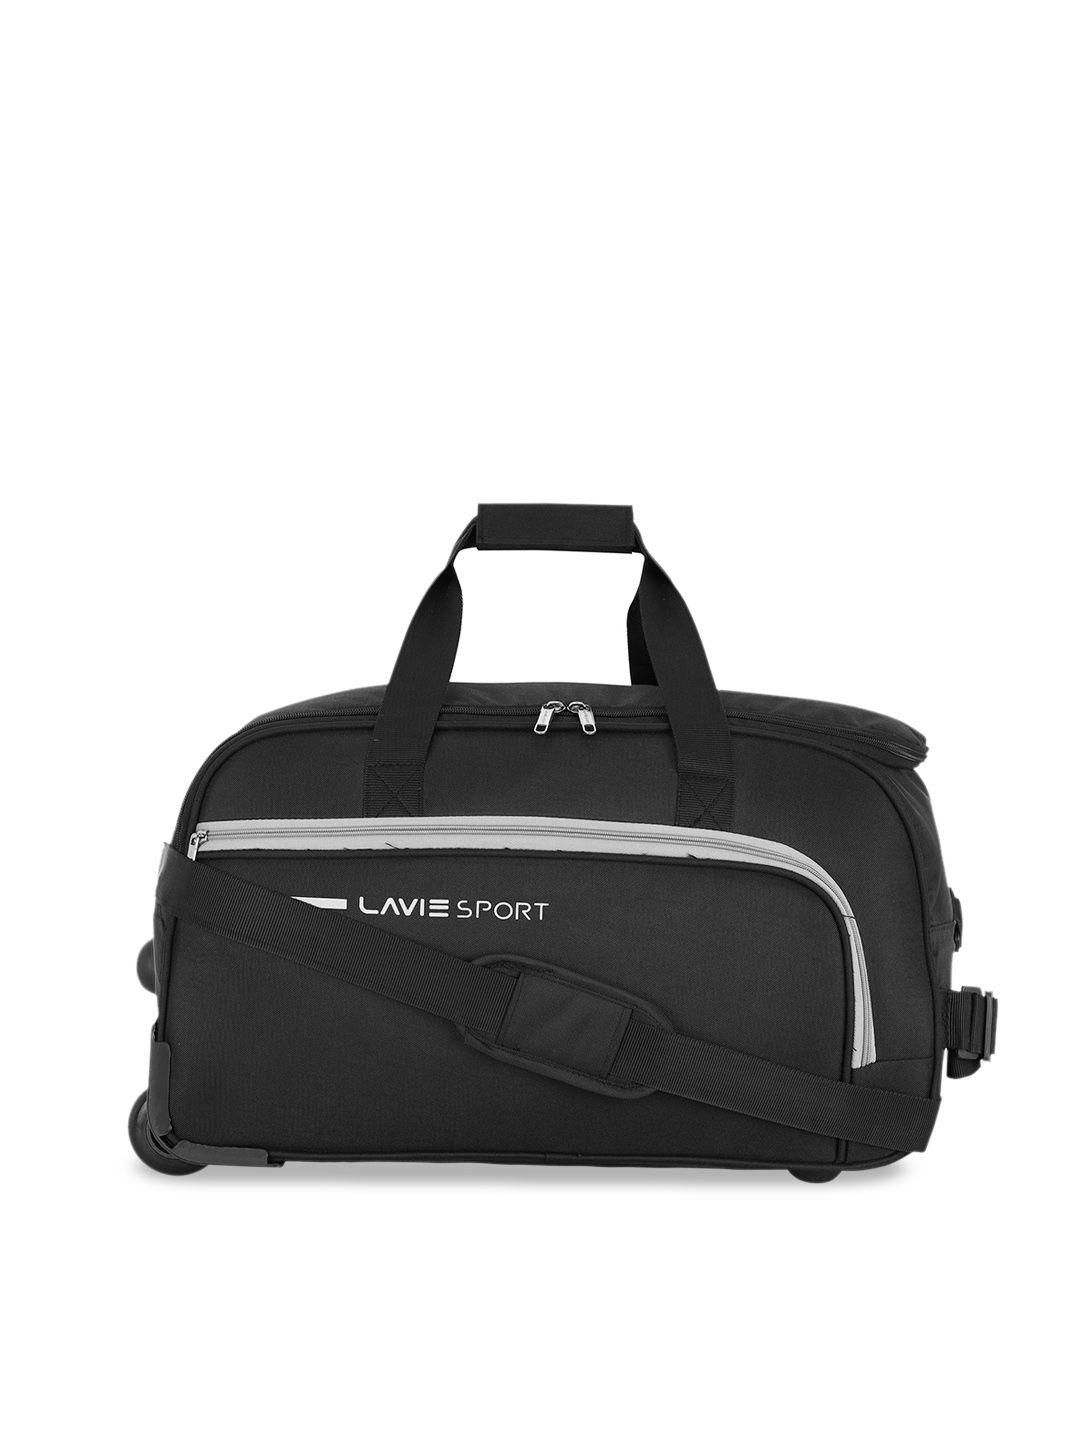 lavie sport soft-sided medium cabin size small trolley bag - 53 cm